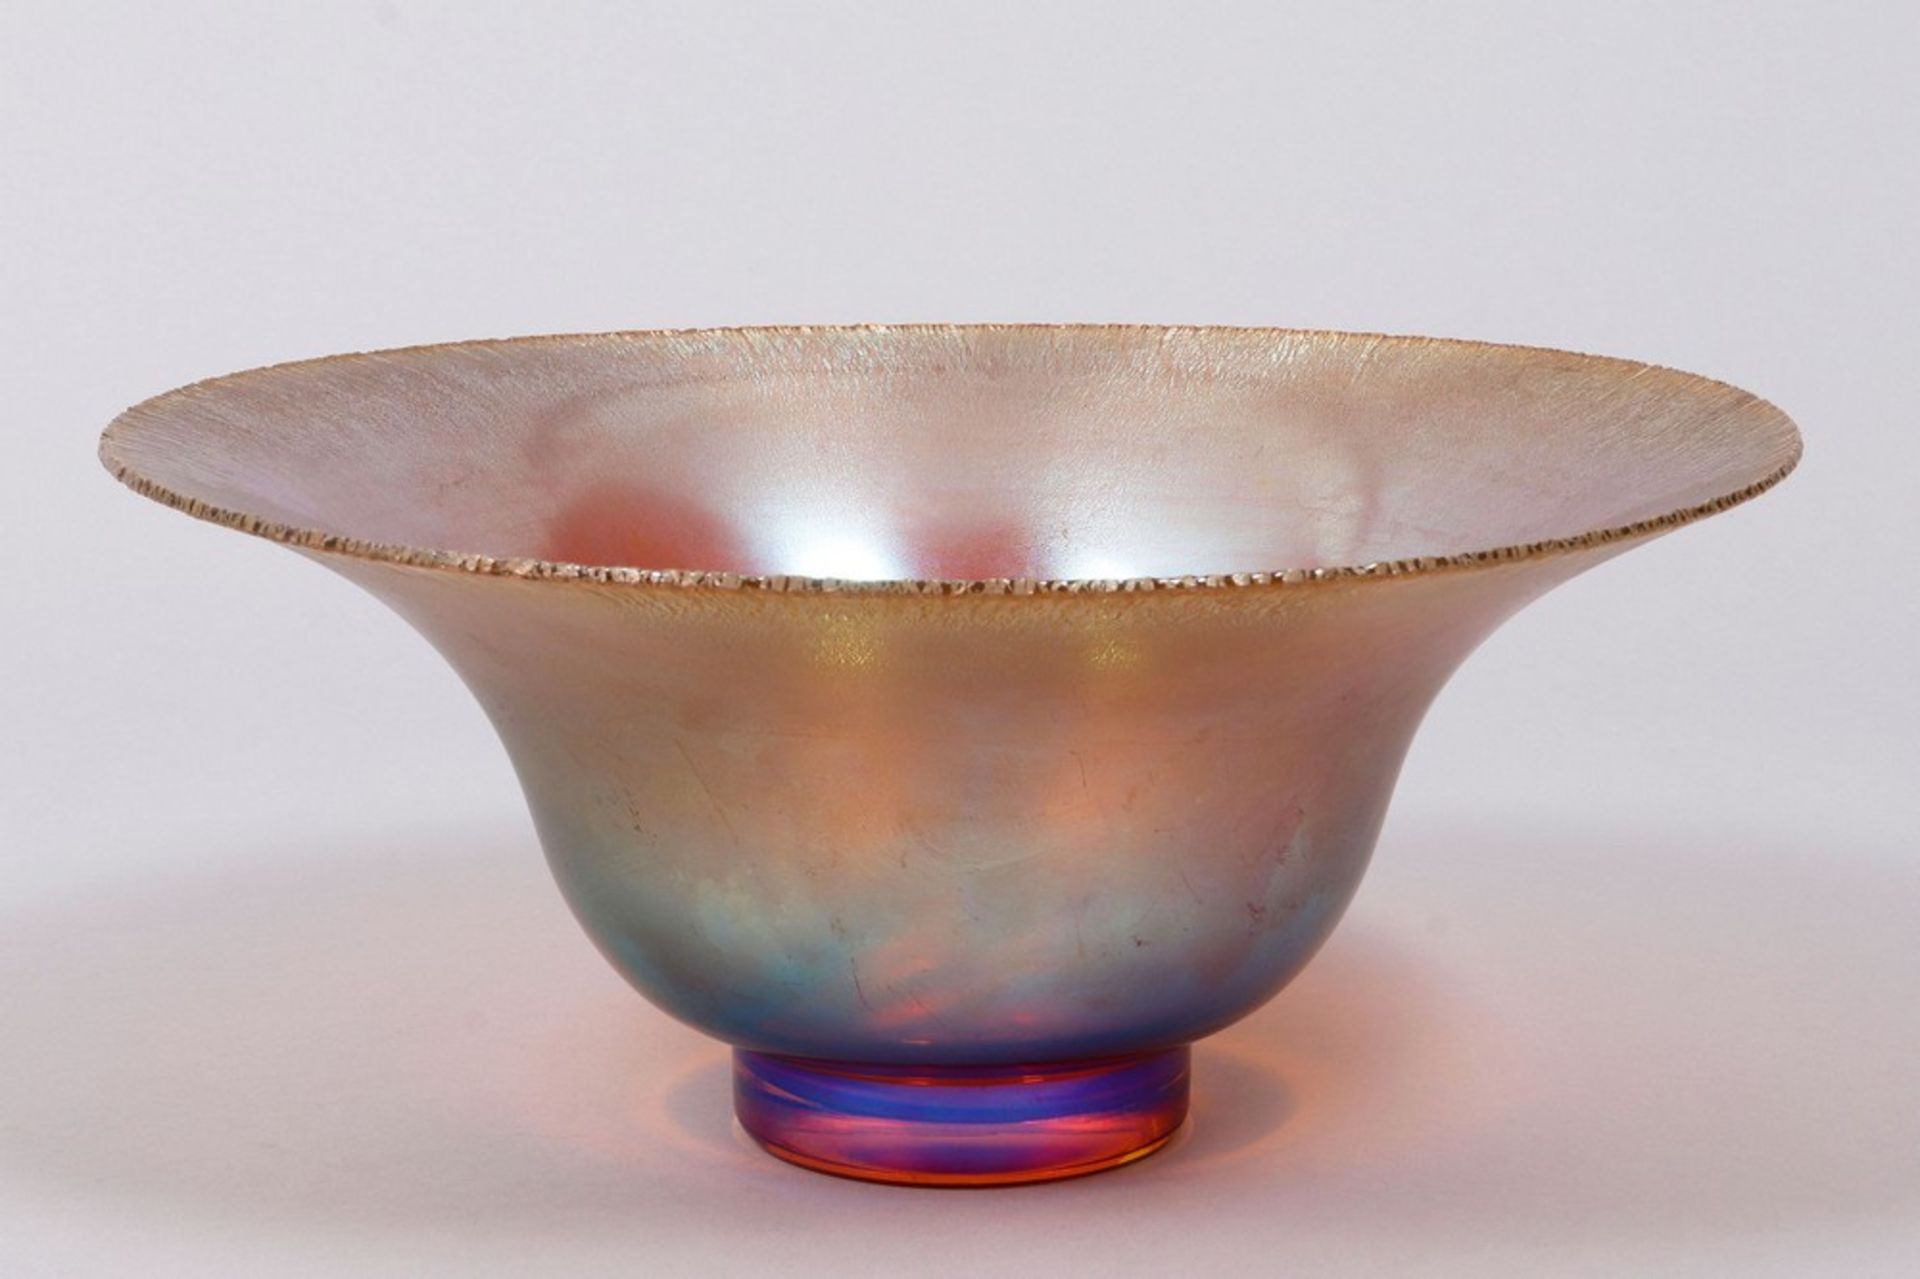 Large "Myra" bowl, WMF, c. 1930